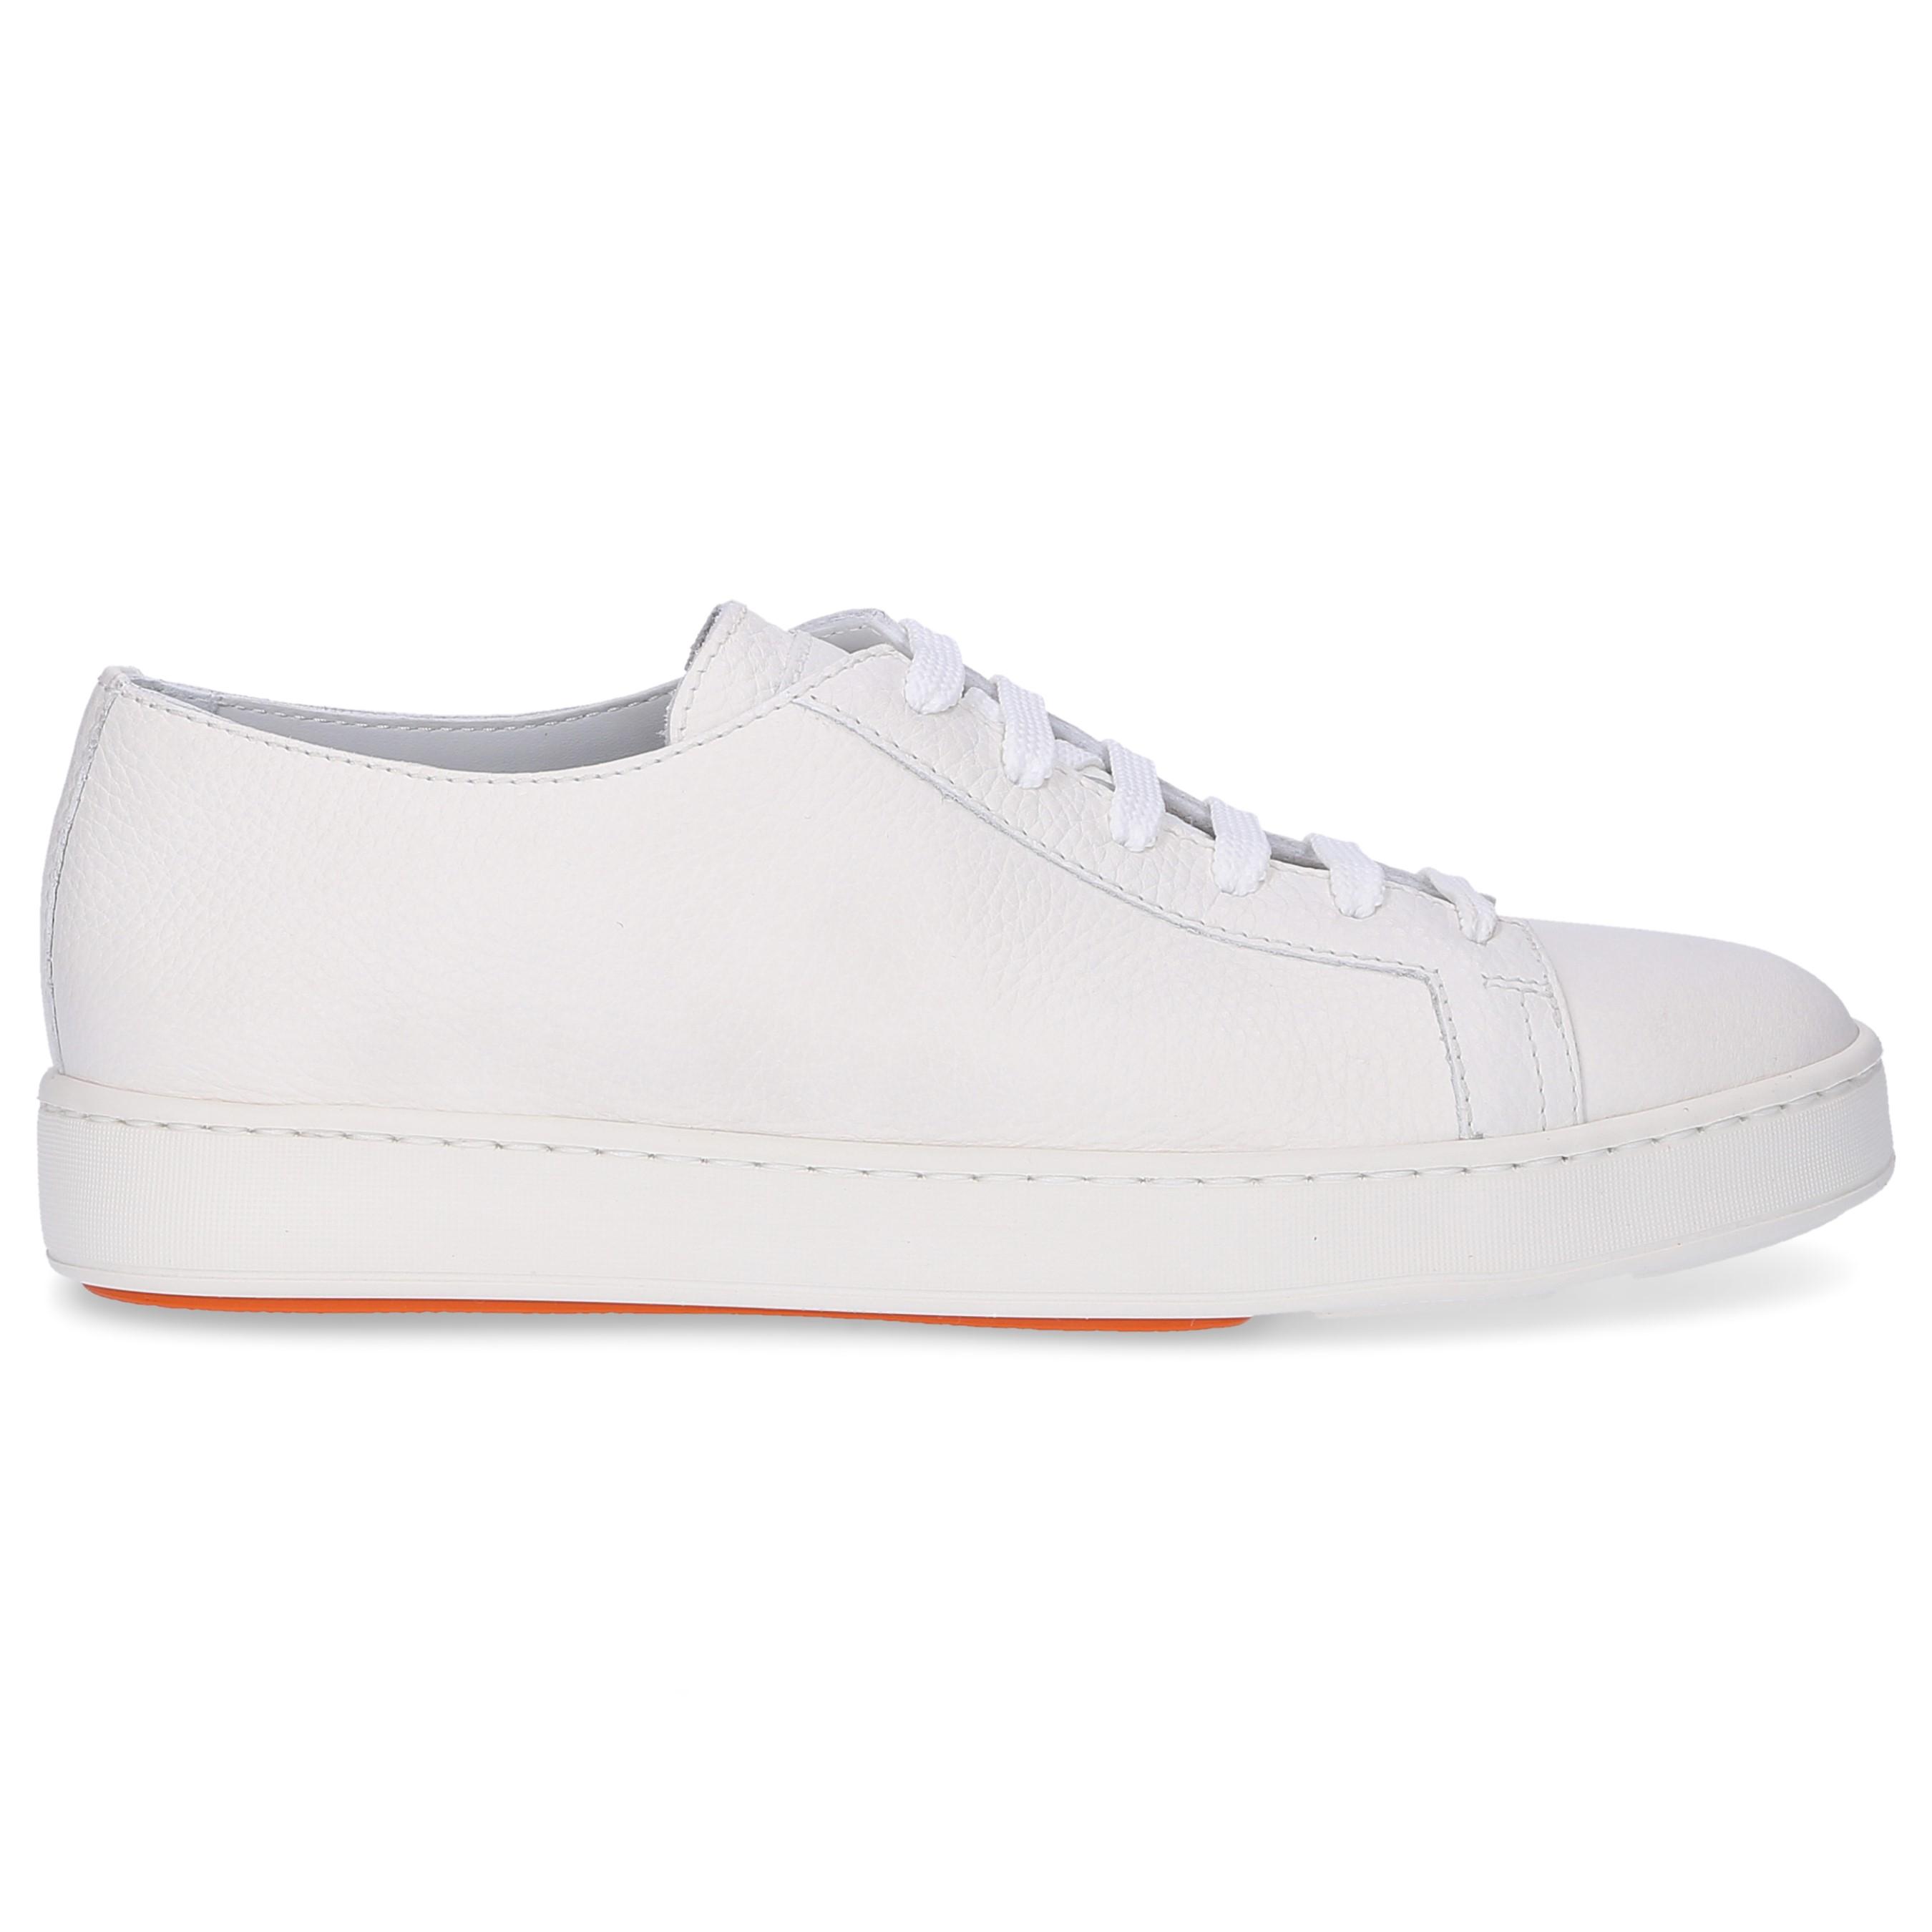 Santoni Leather Sneakers 14387 in White for Men - Lyst